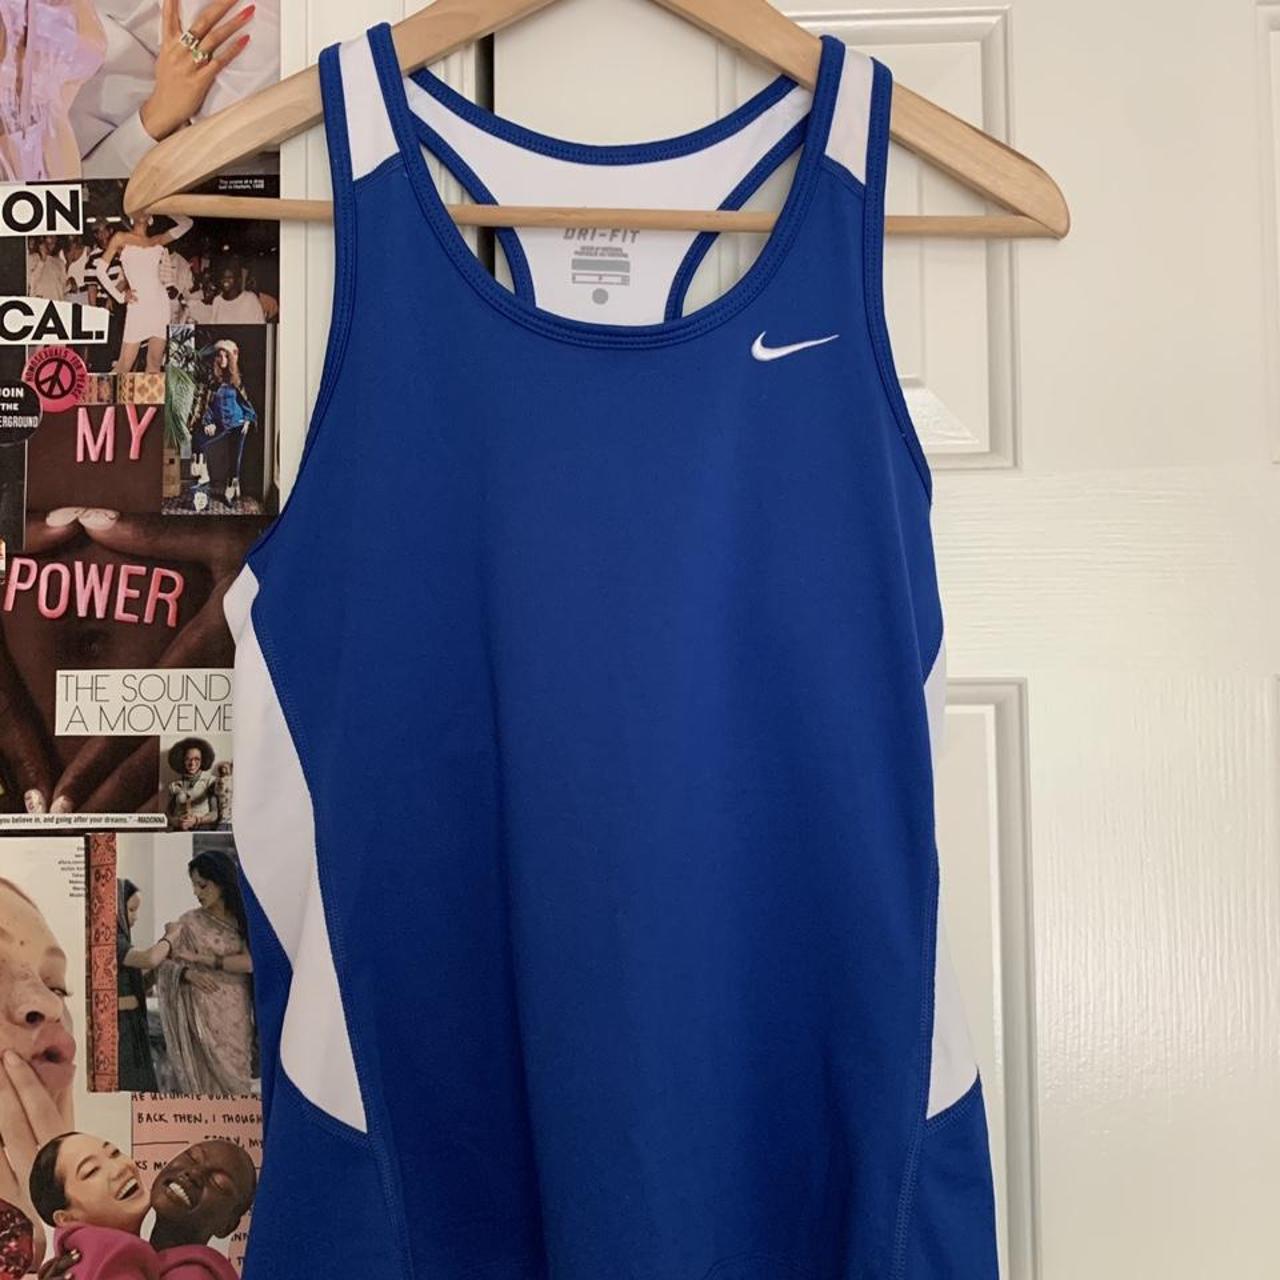 Nike Women's Blue and White Vest | Depop